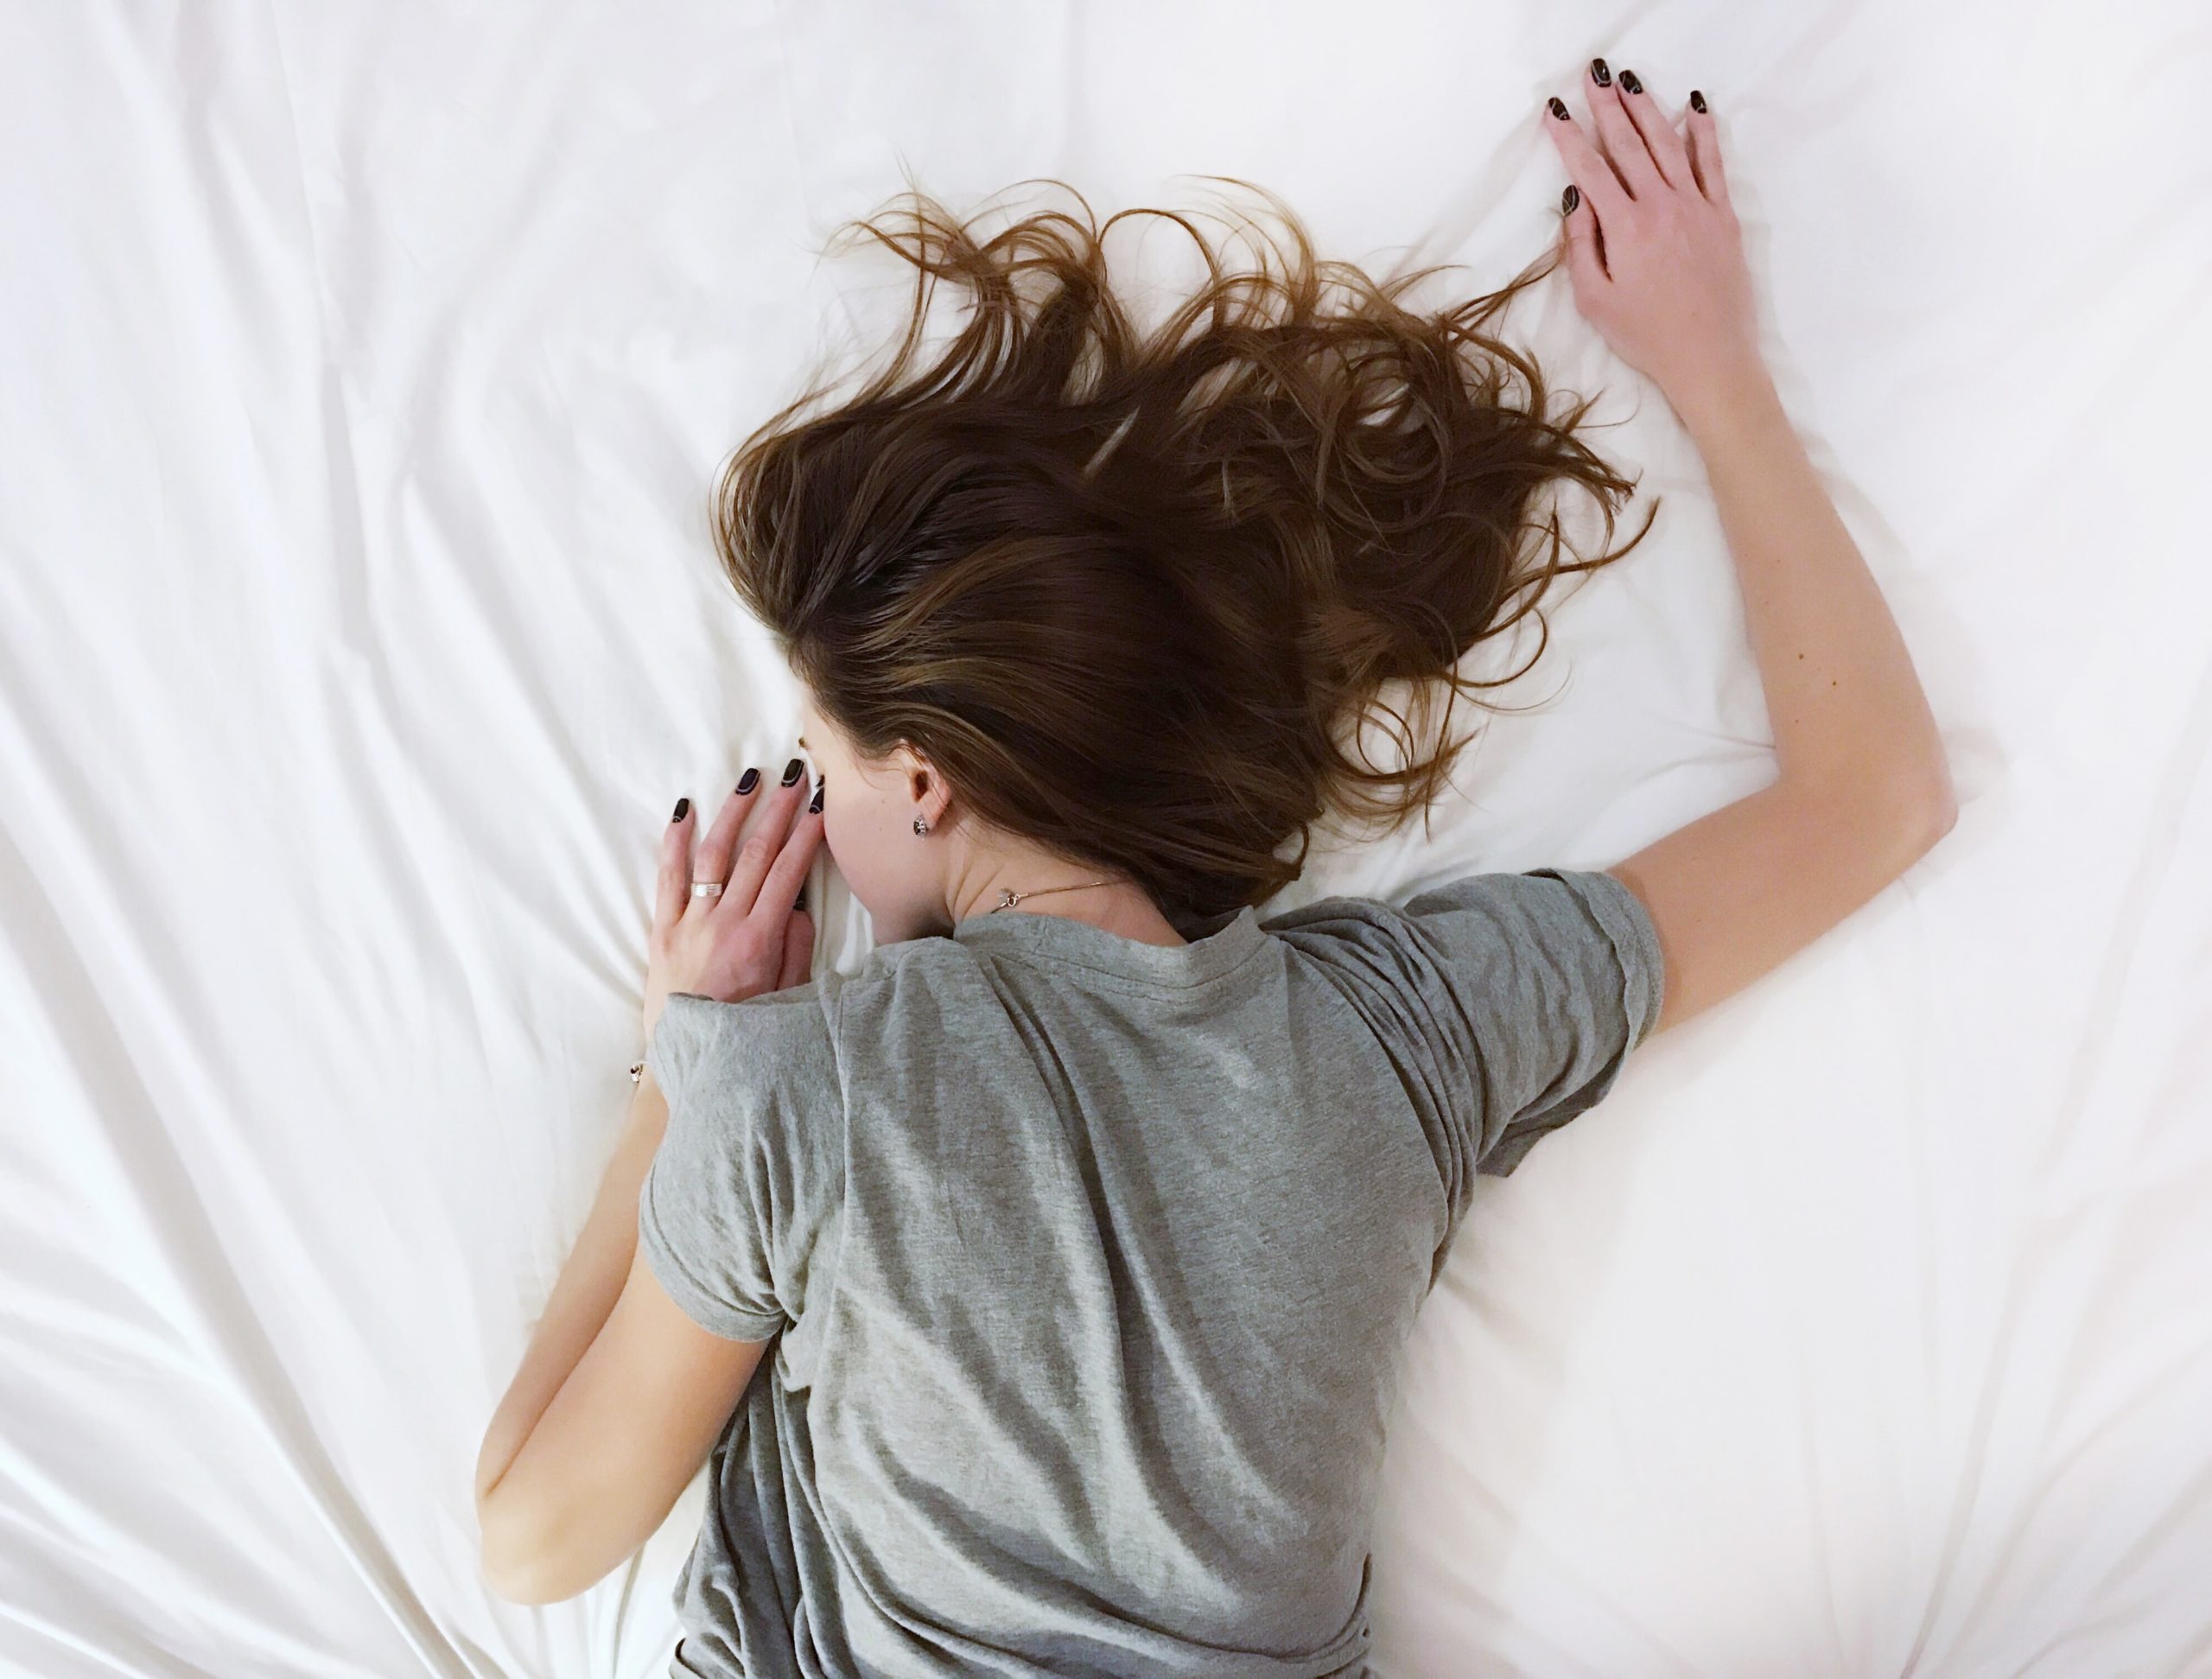 Sleep Issues in Midlife Women